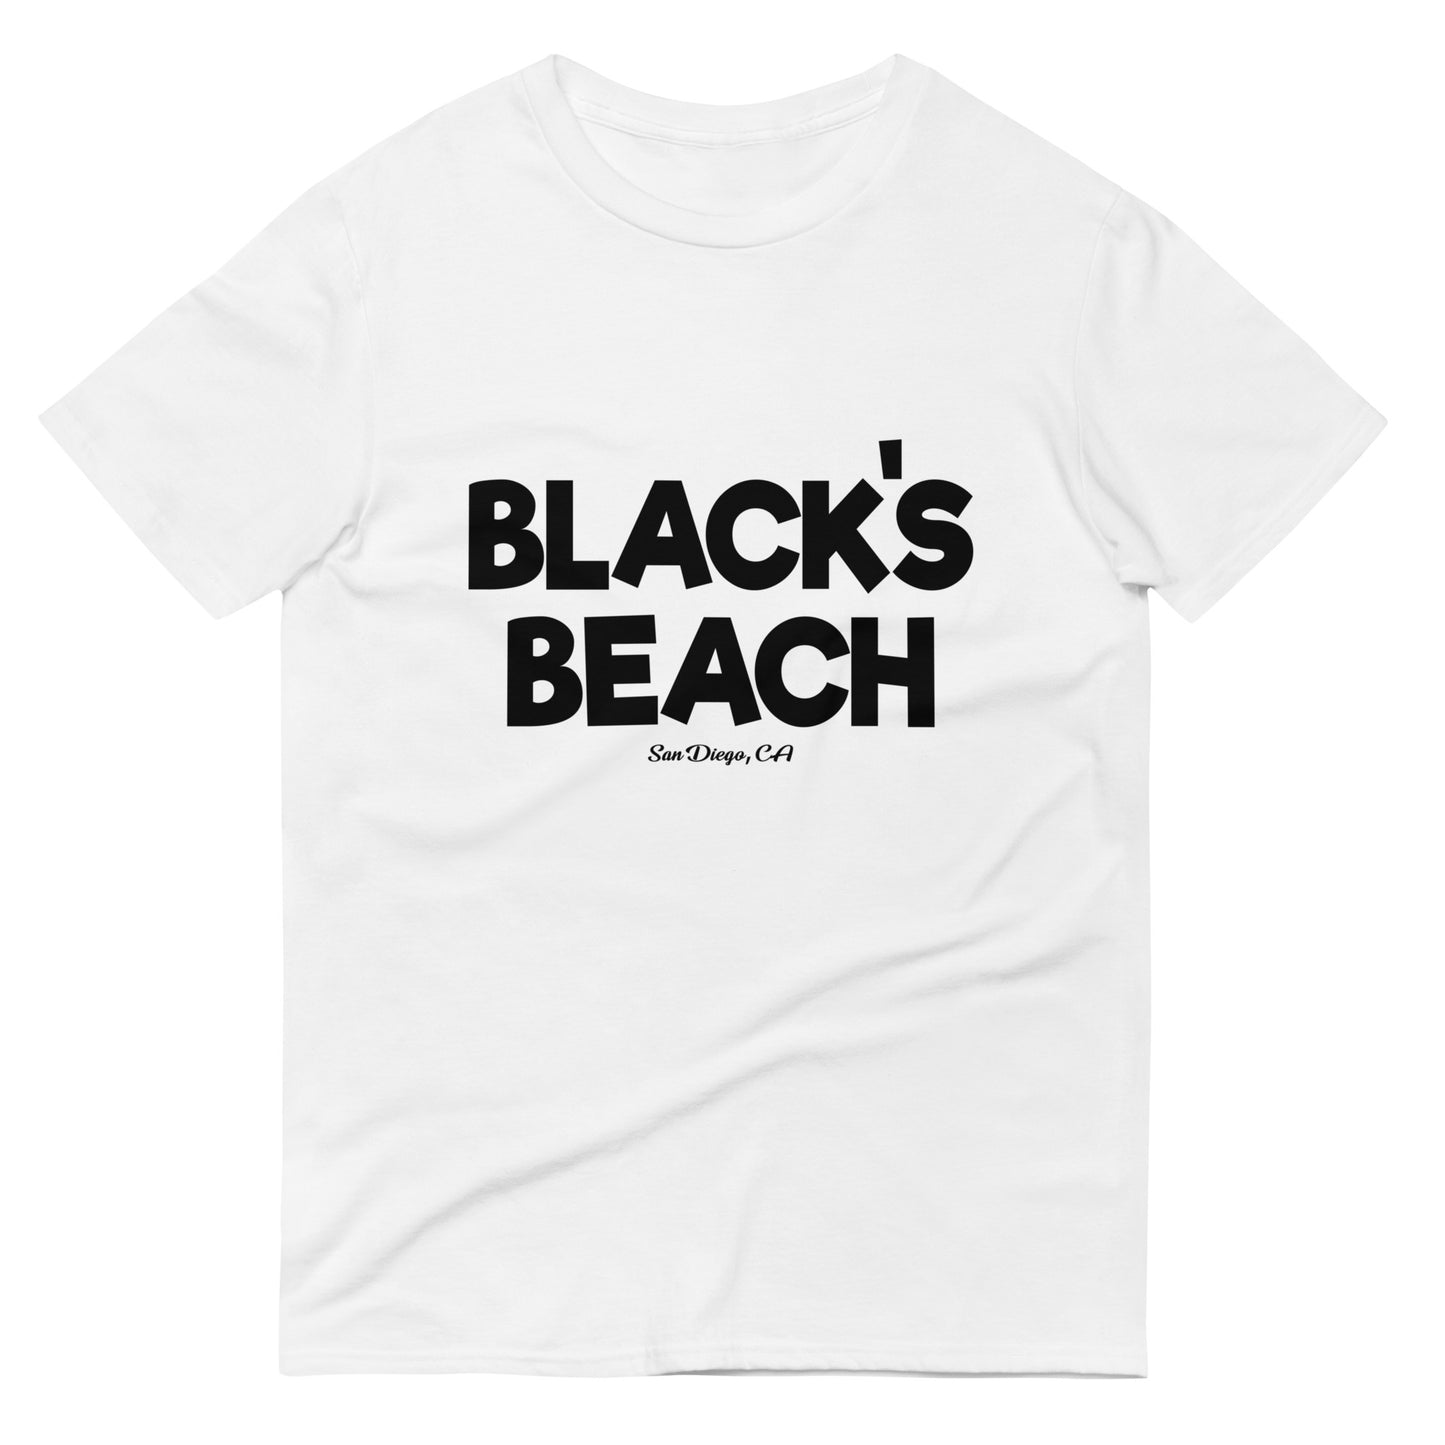 Black's Beach Tees / Style 01 / Short-Sleeve T-Shirt